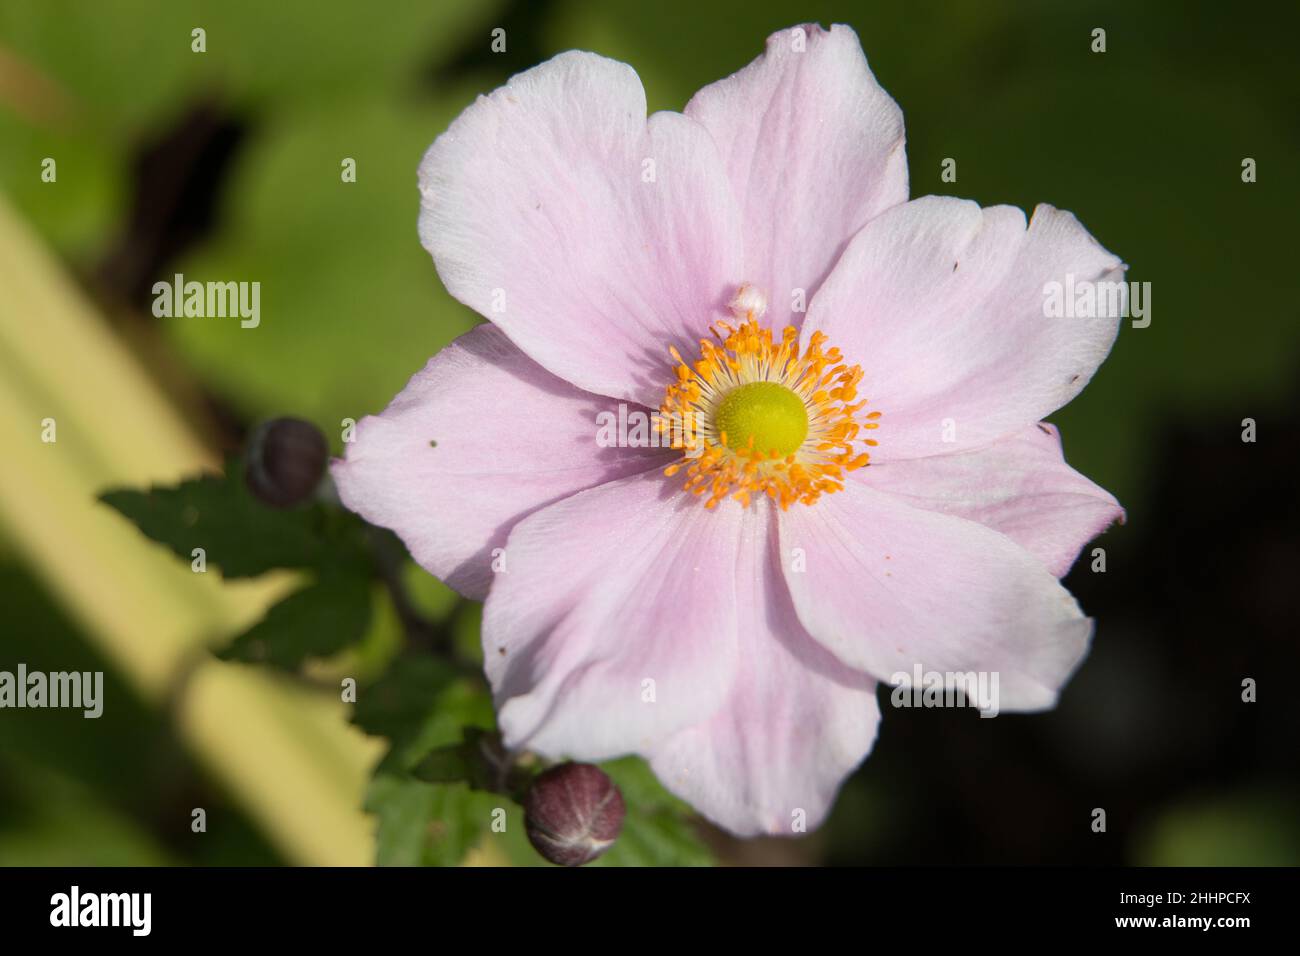 Pink Japanese anemone flower, Anemone x hybrida elegans, Japanese tumbleweed or windflower, close-up view showing stamens Stock Photo